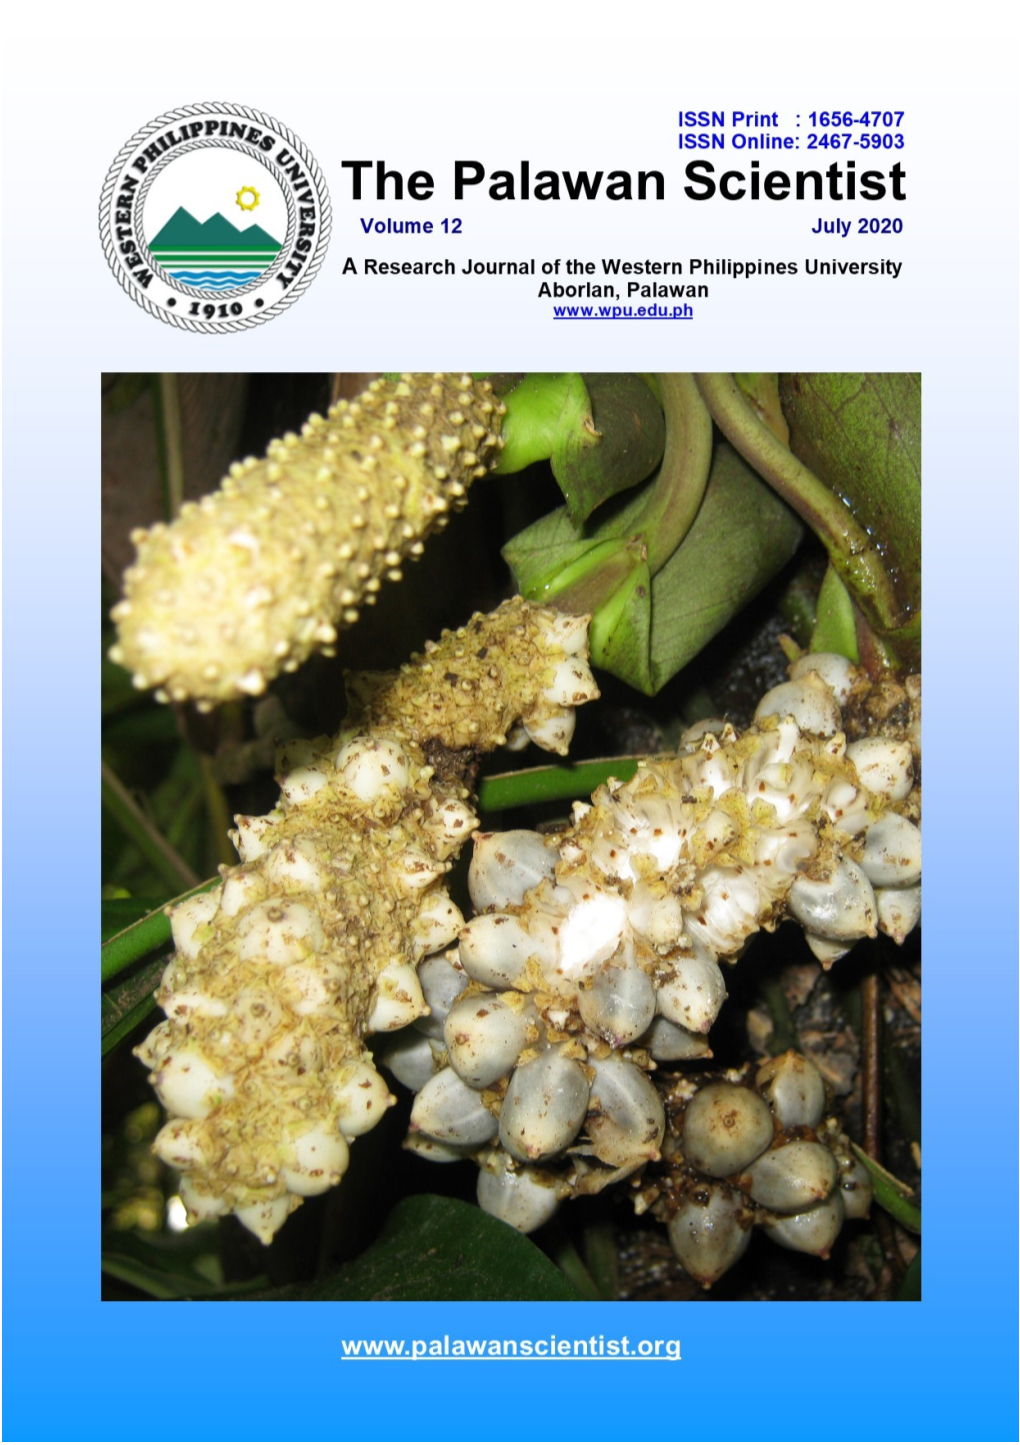 The Palawan Scientist Volume 12 – Full Journal